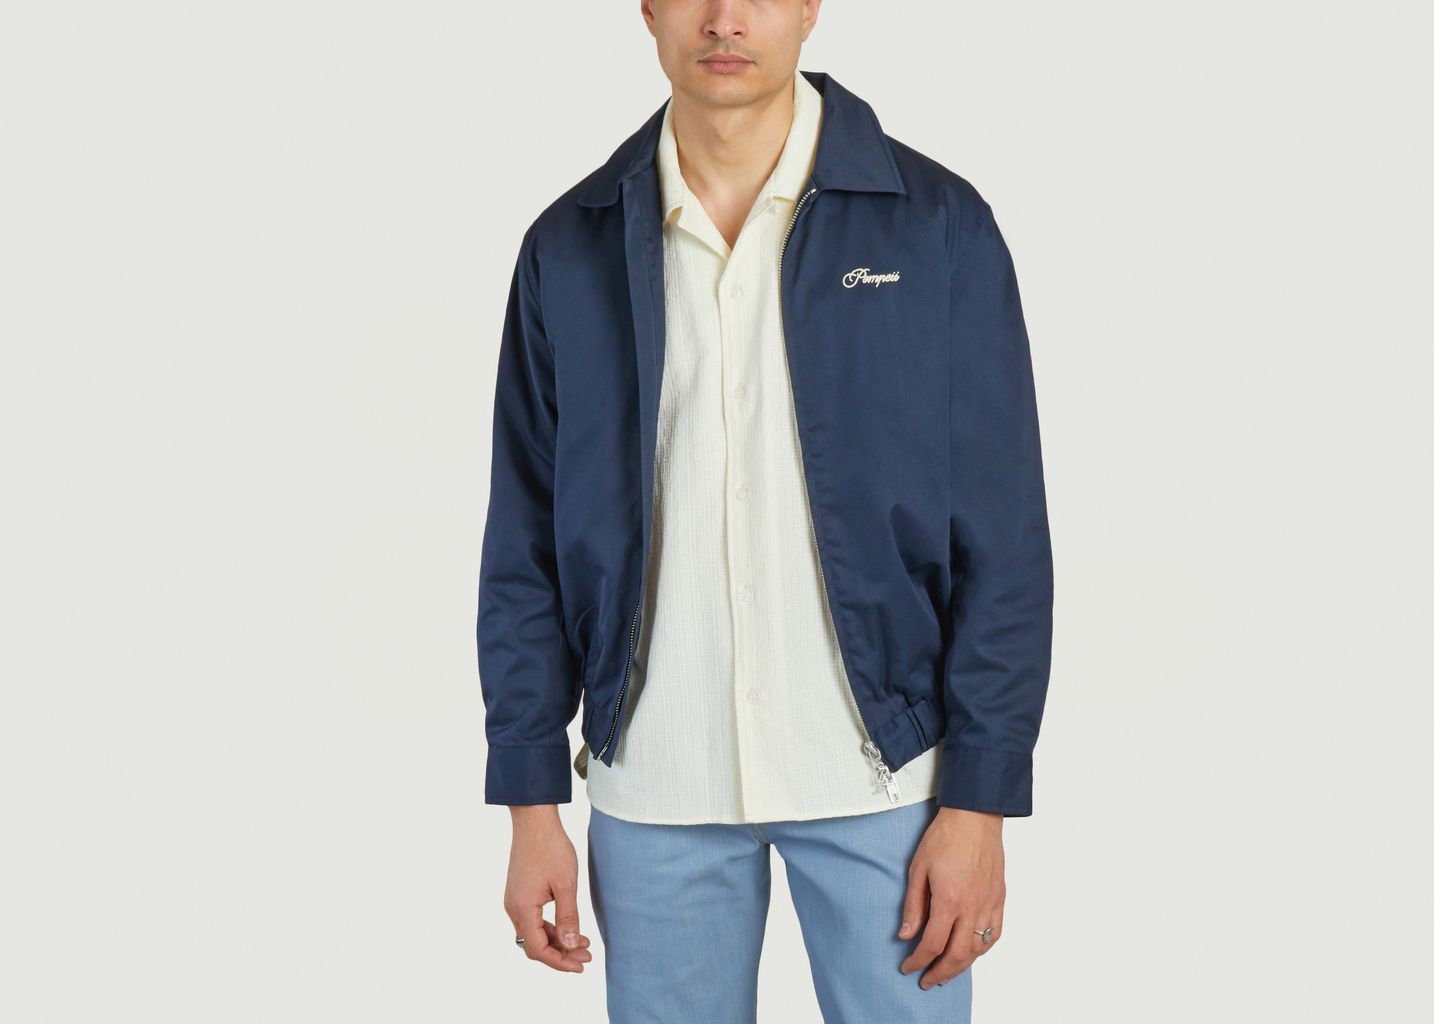 Harrington jacket - Pompeii Brand